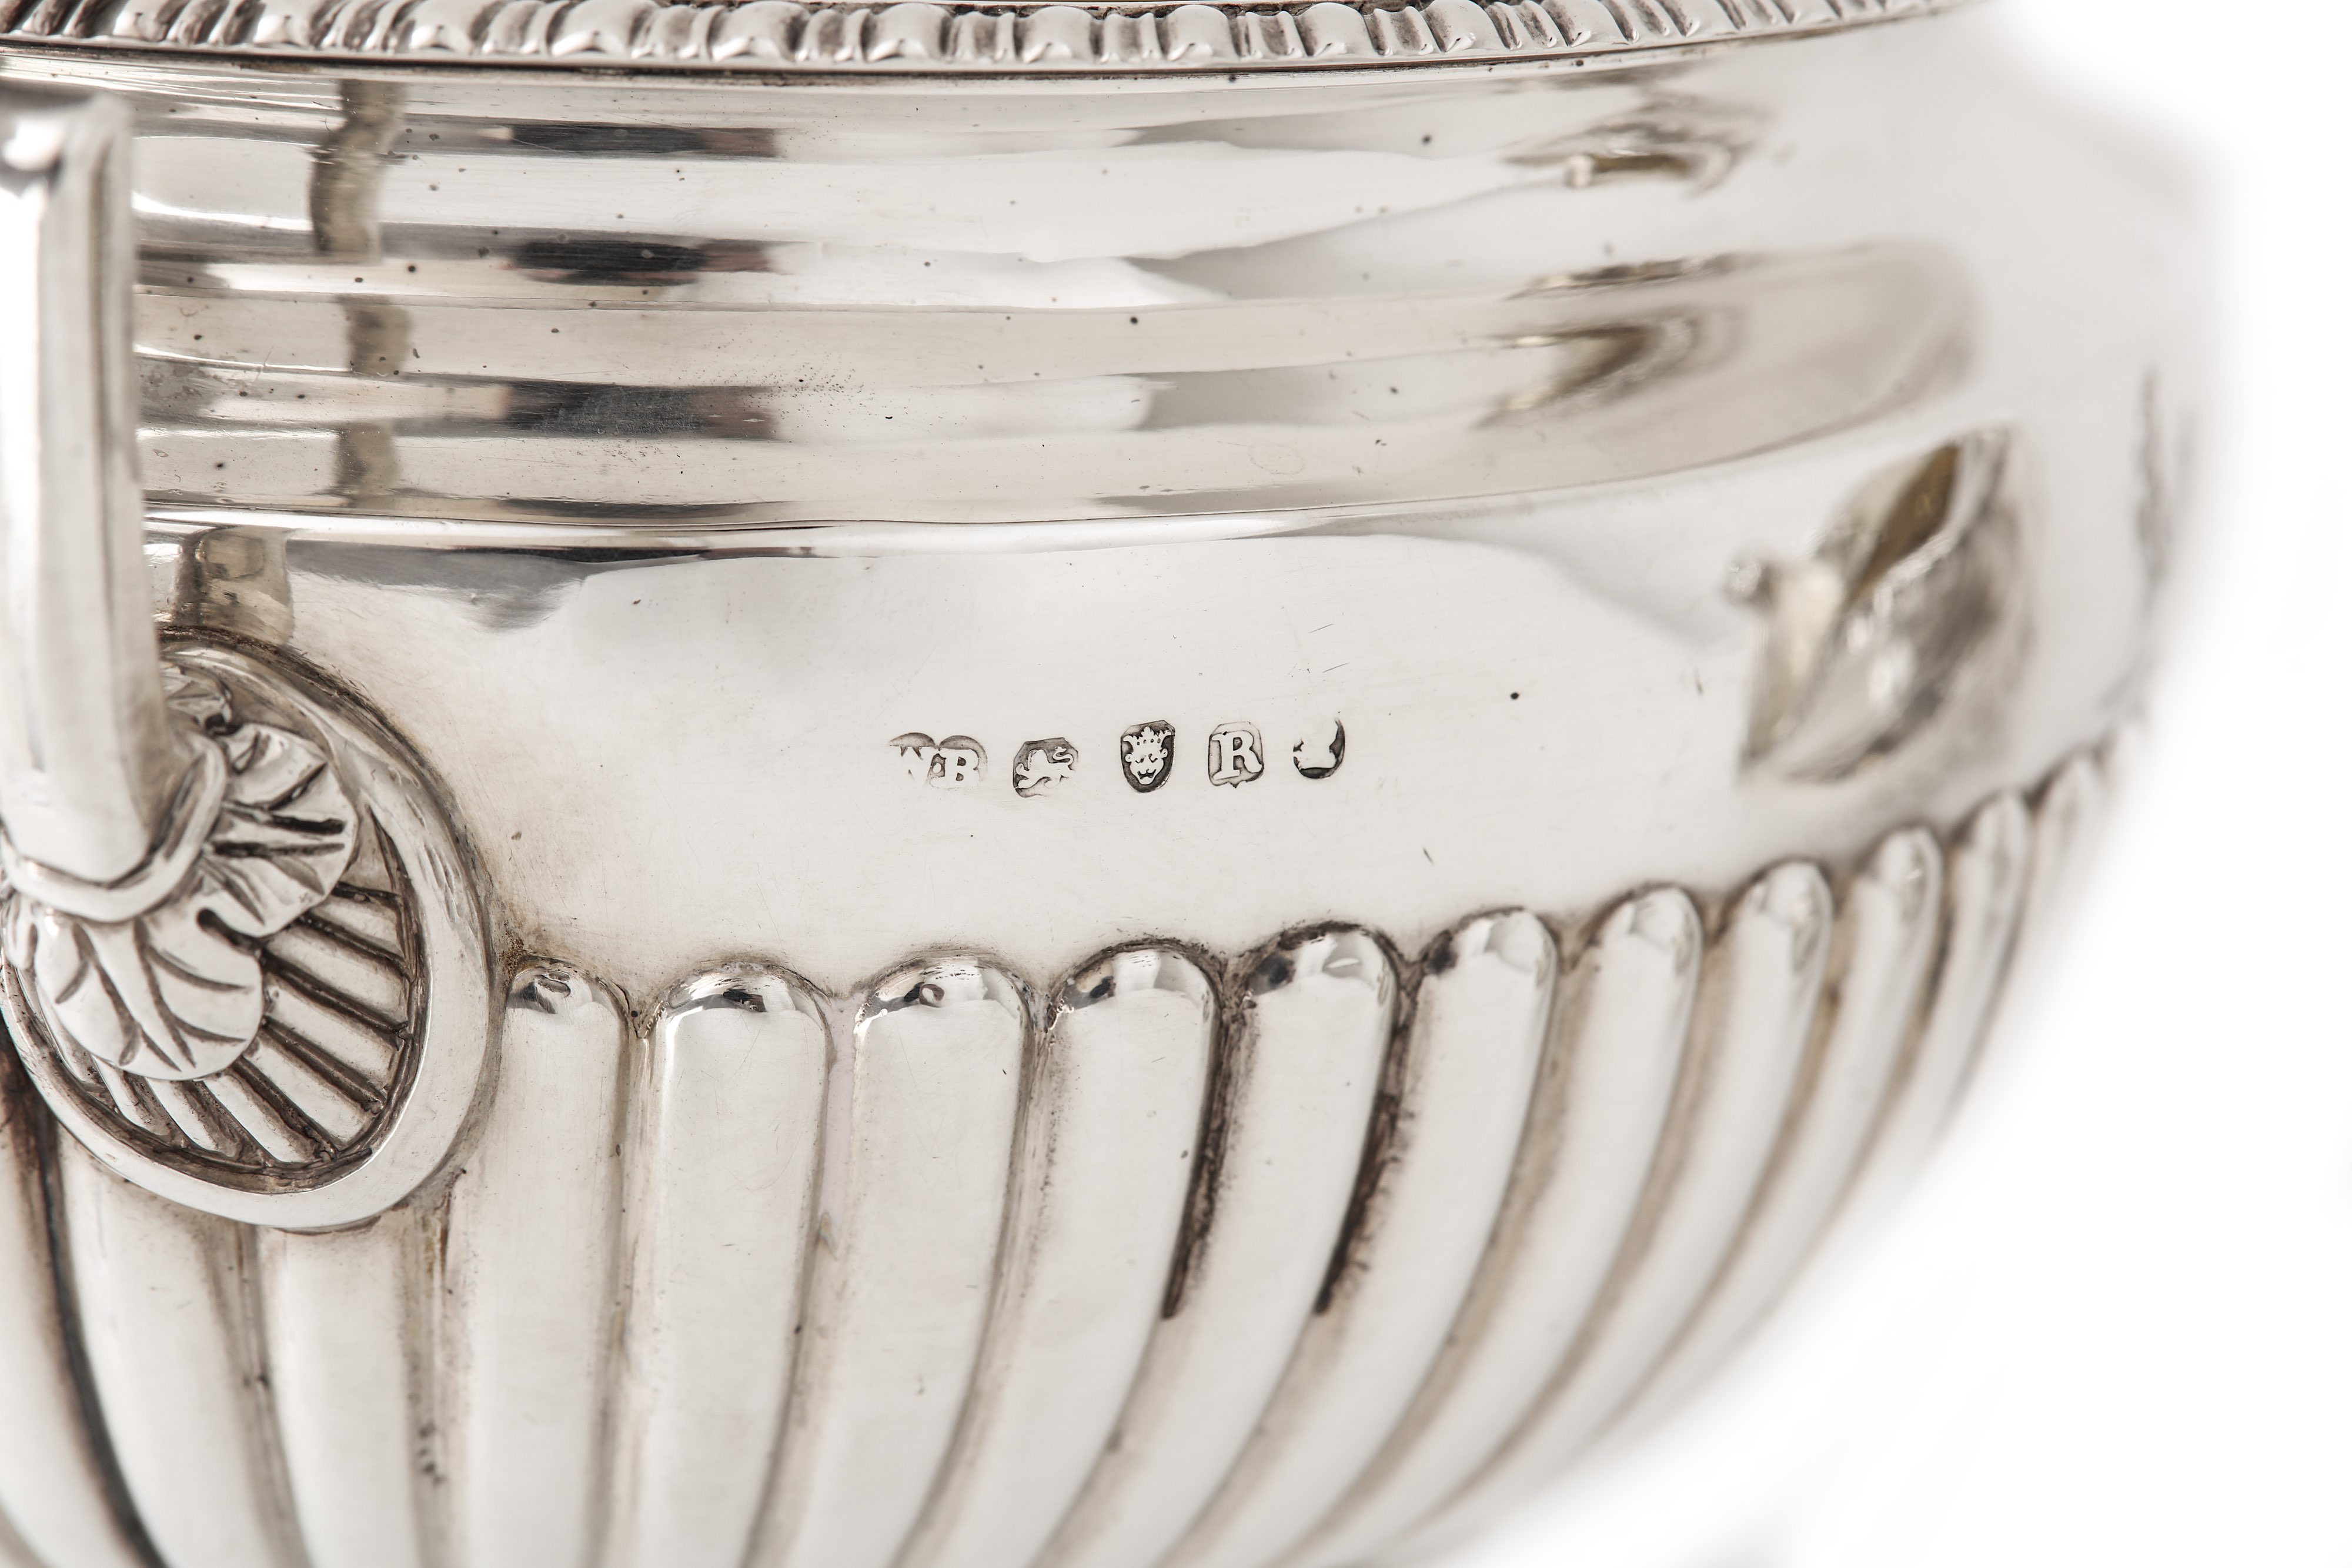 A George III sterling silver sugar bowl and milk jug, London 1812 by William Bateman II - Image 4 of 6